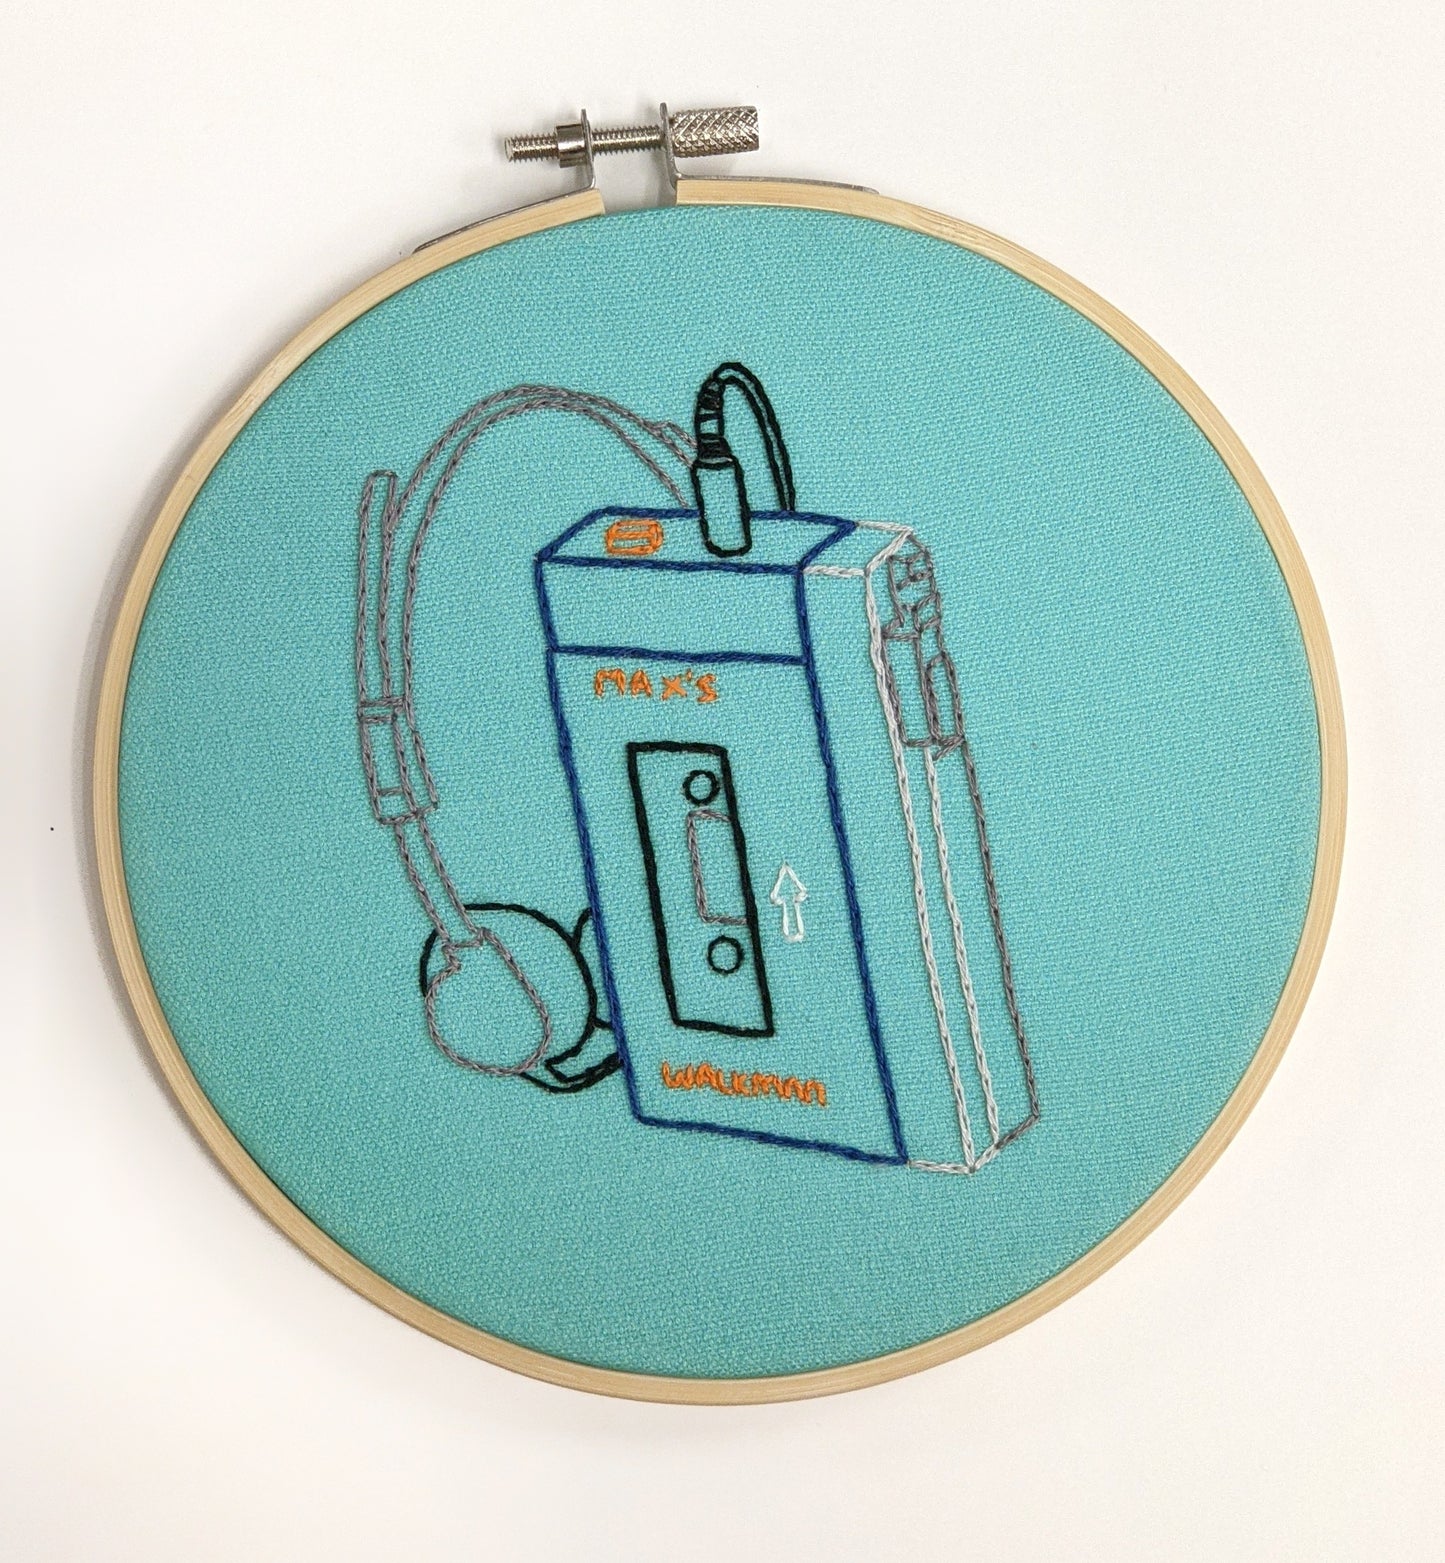 Max's Walkman Embroidery Kit